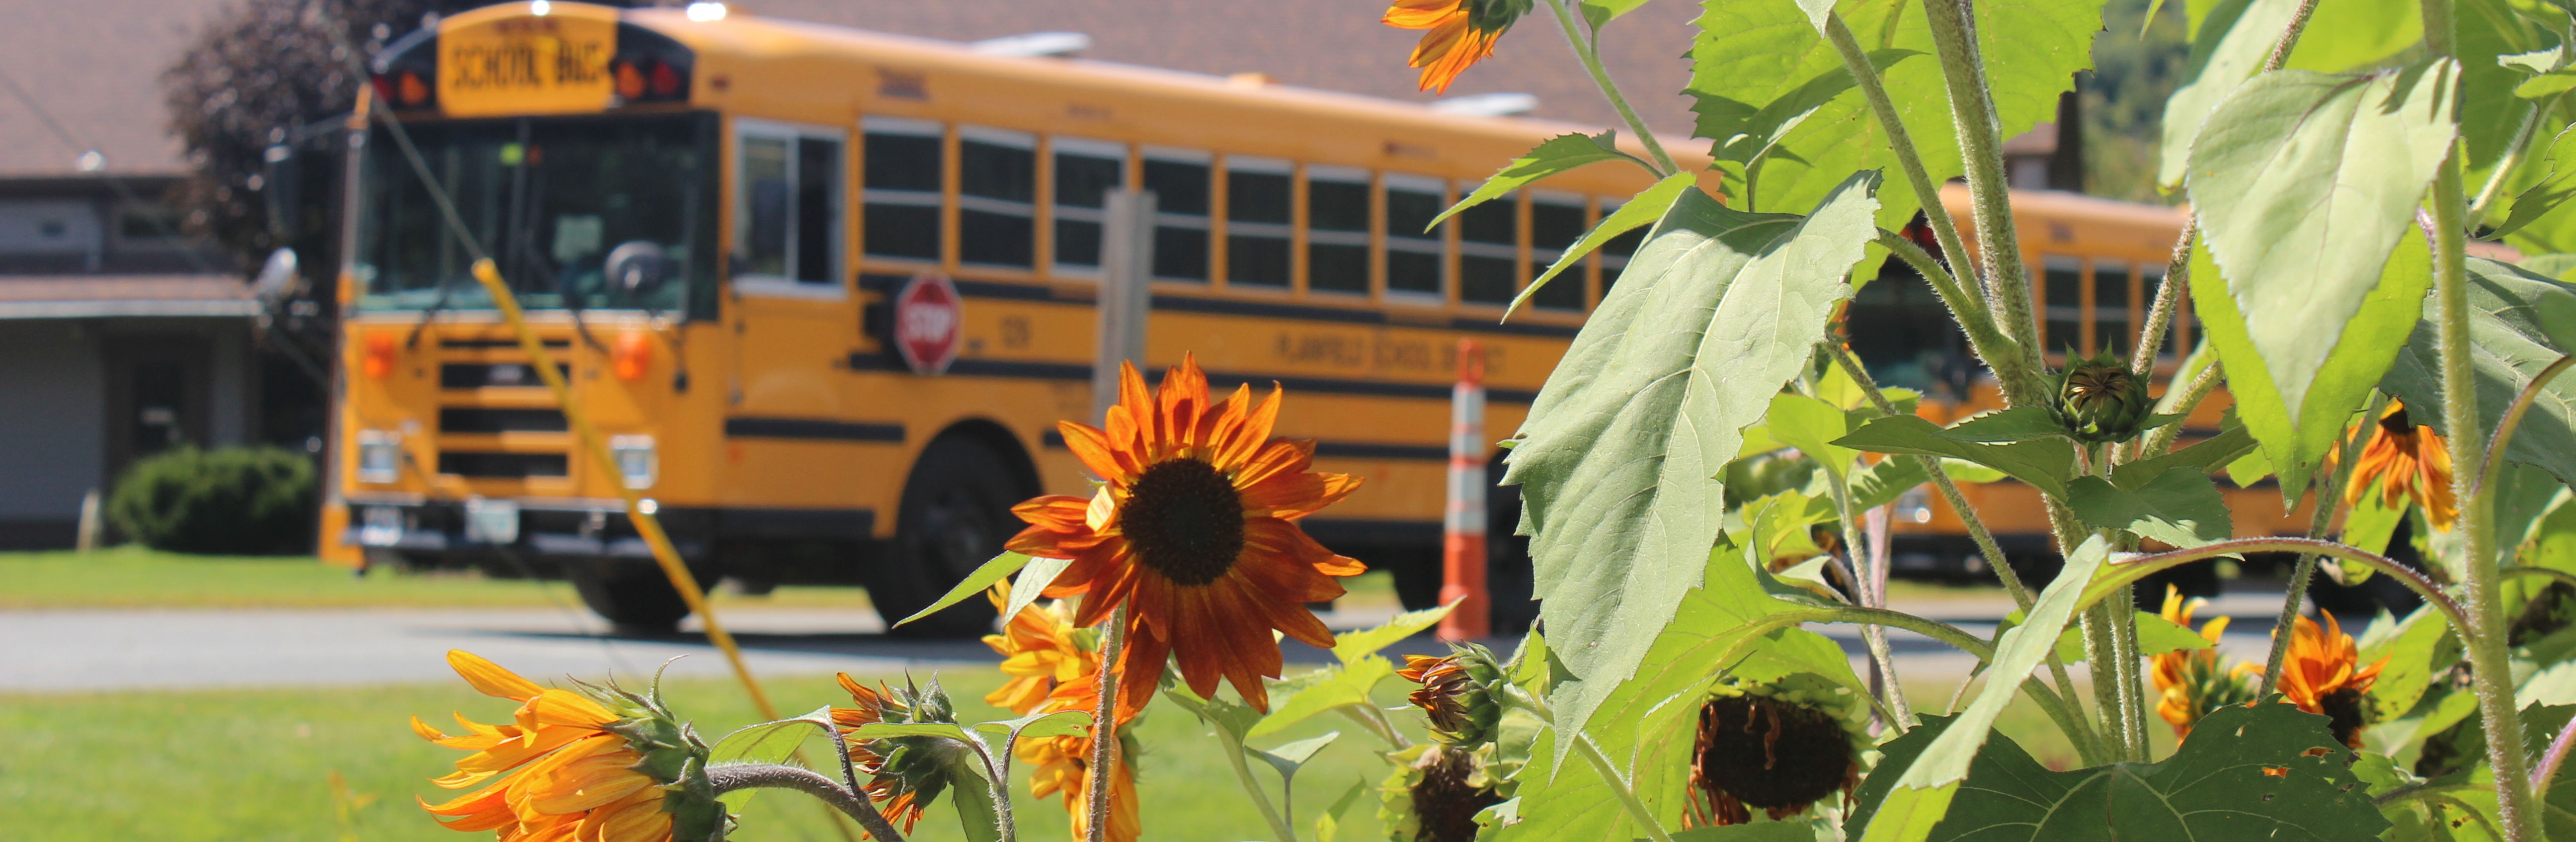 Plainfield Elementary School Bus